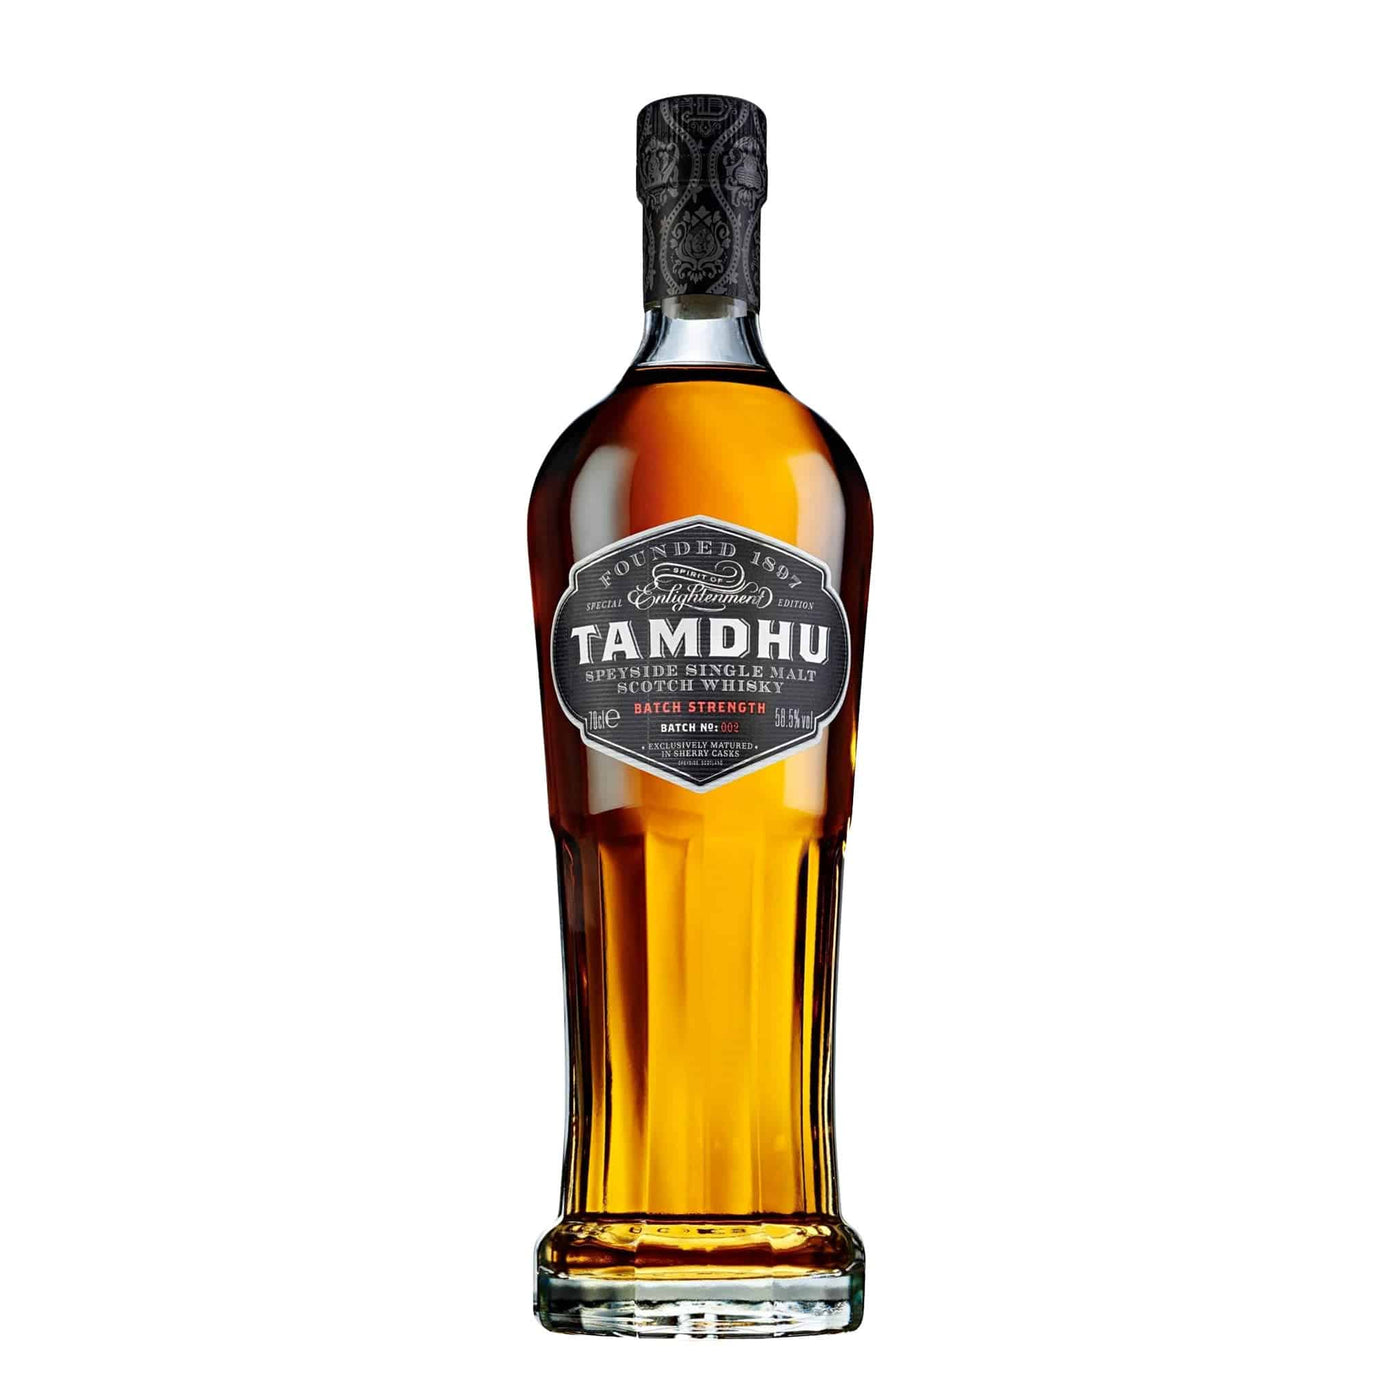 Tamdhu Batch Strength No 7 Whisky